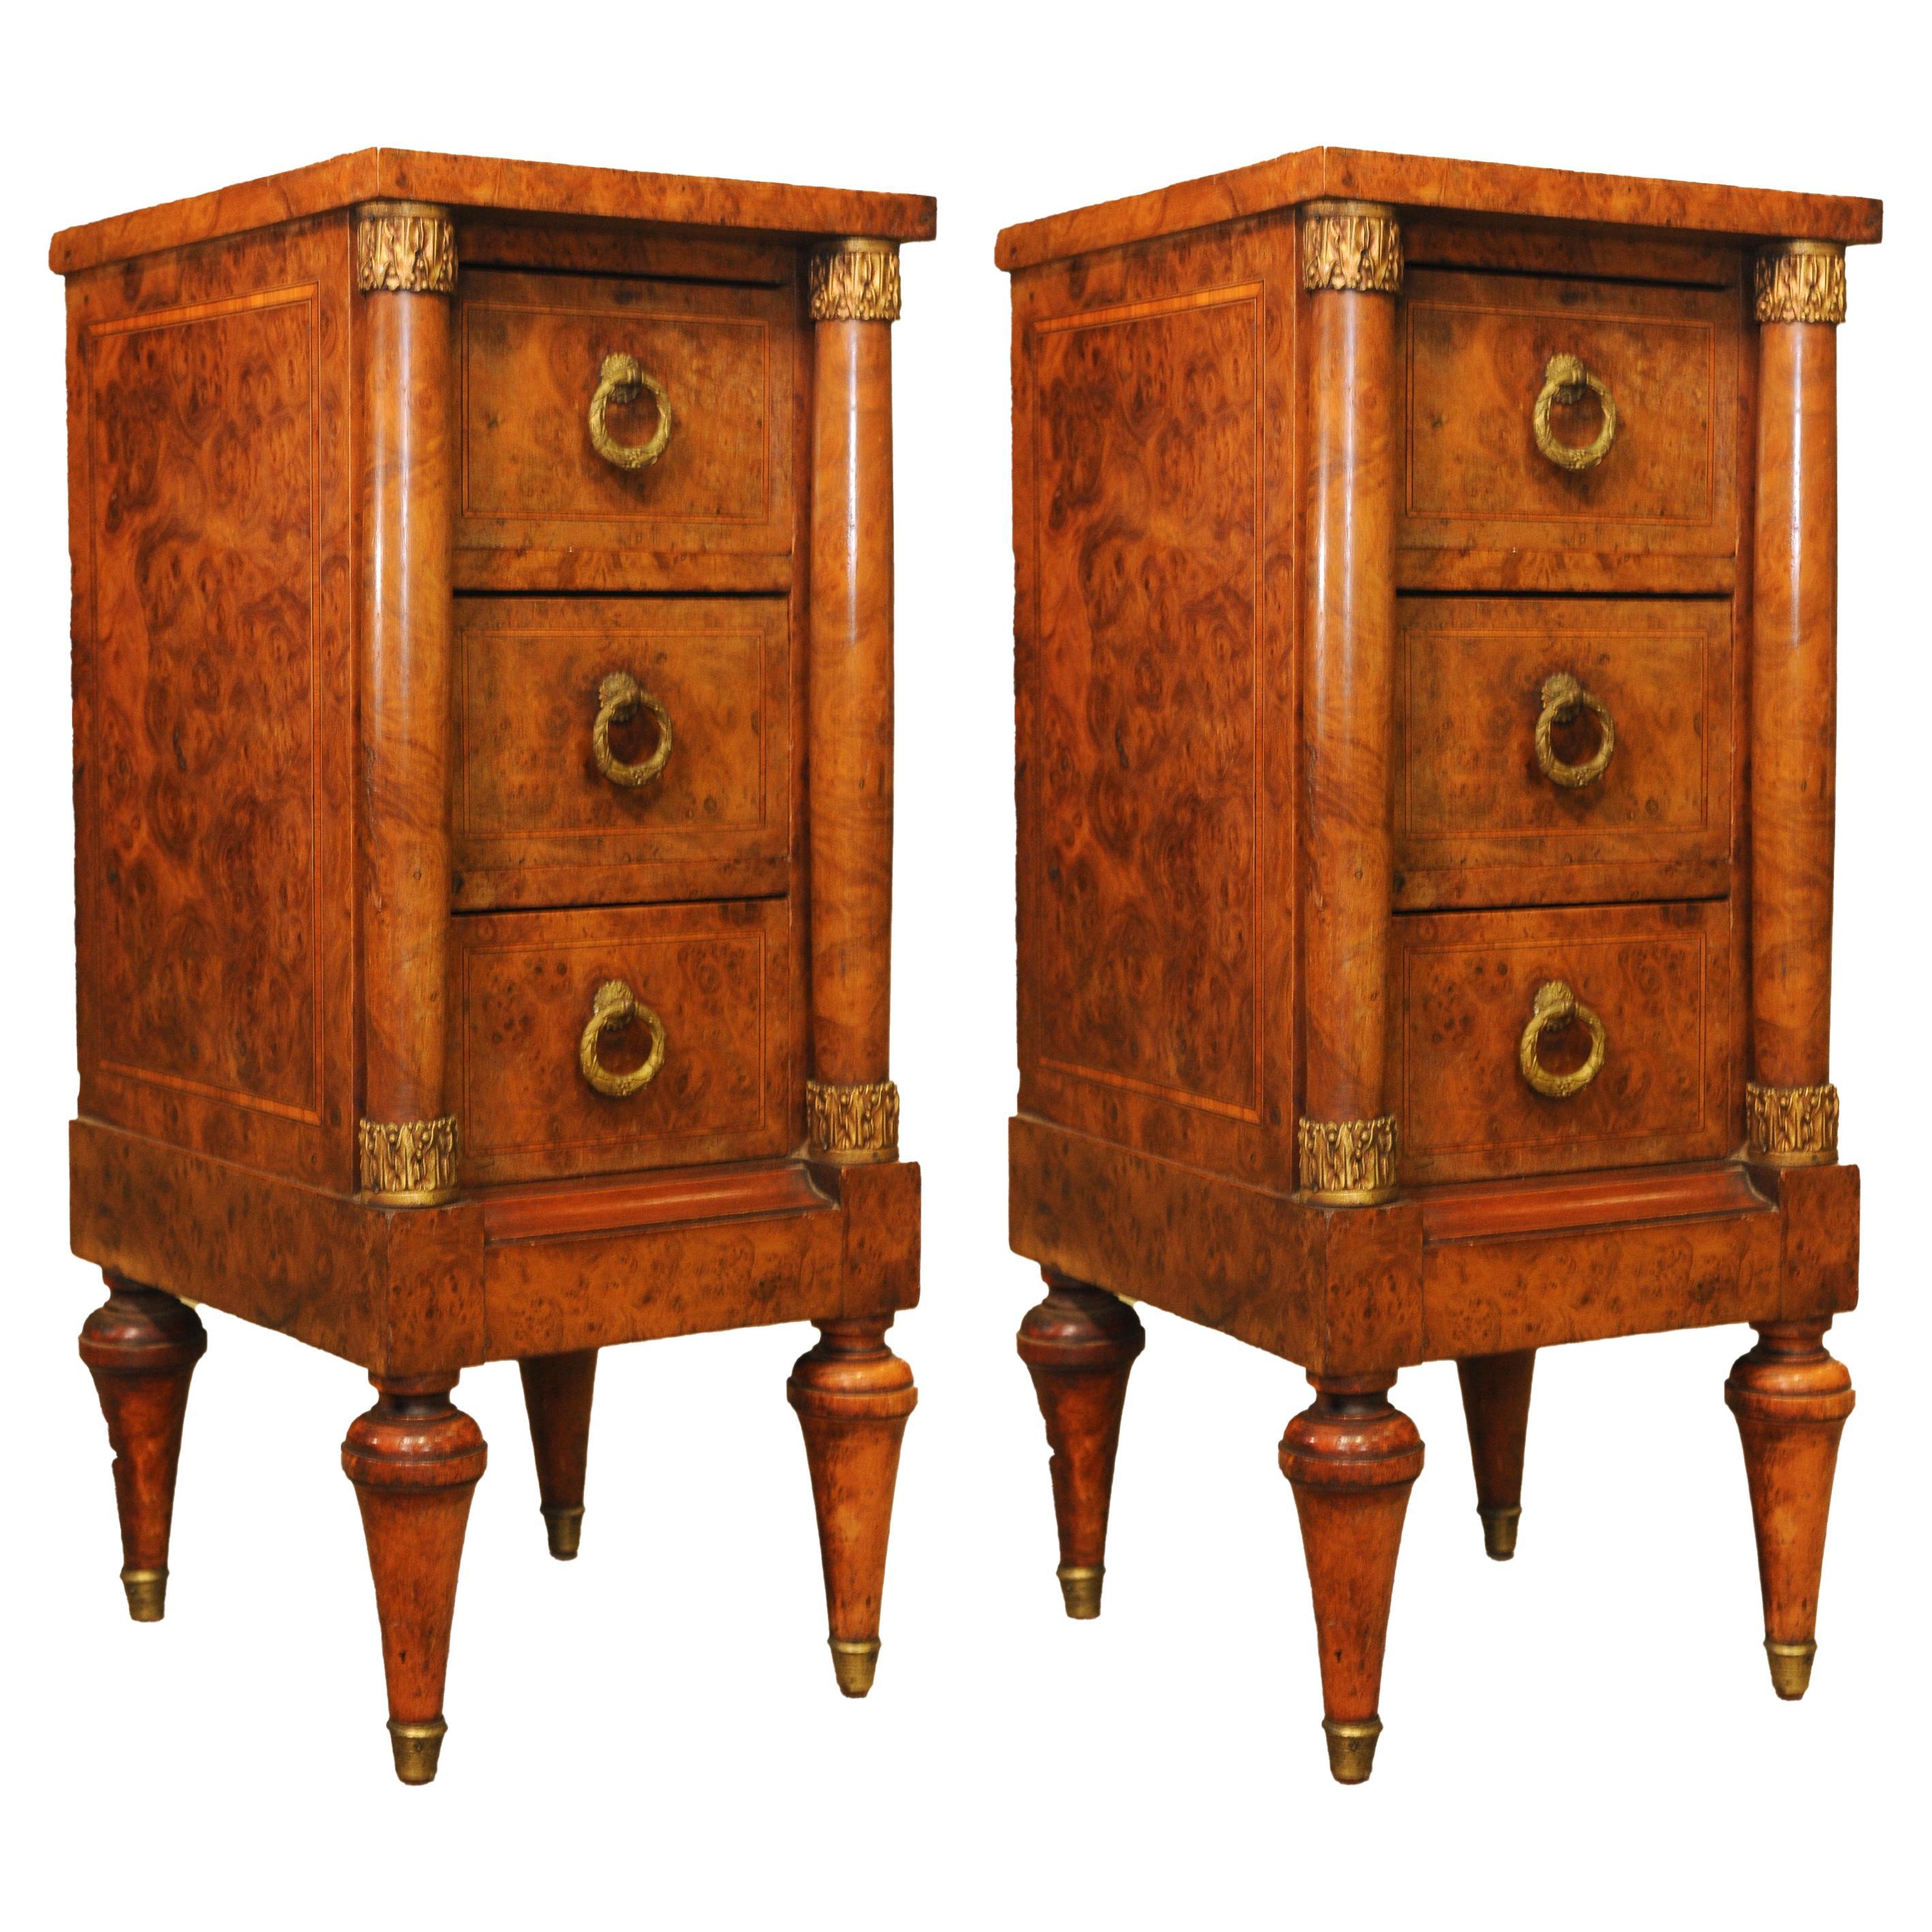 Exquisite Pair of French Empire Design Figured Walnut Three Drawer Nightstands